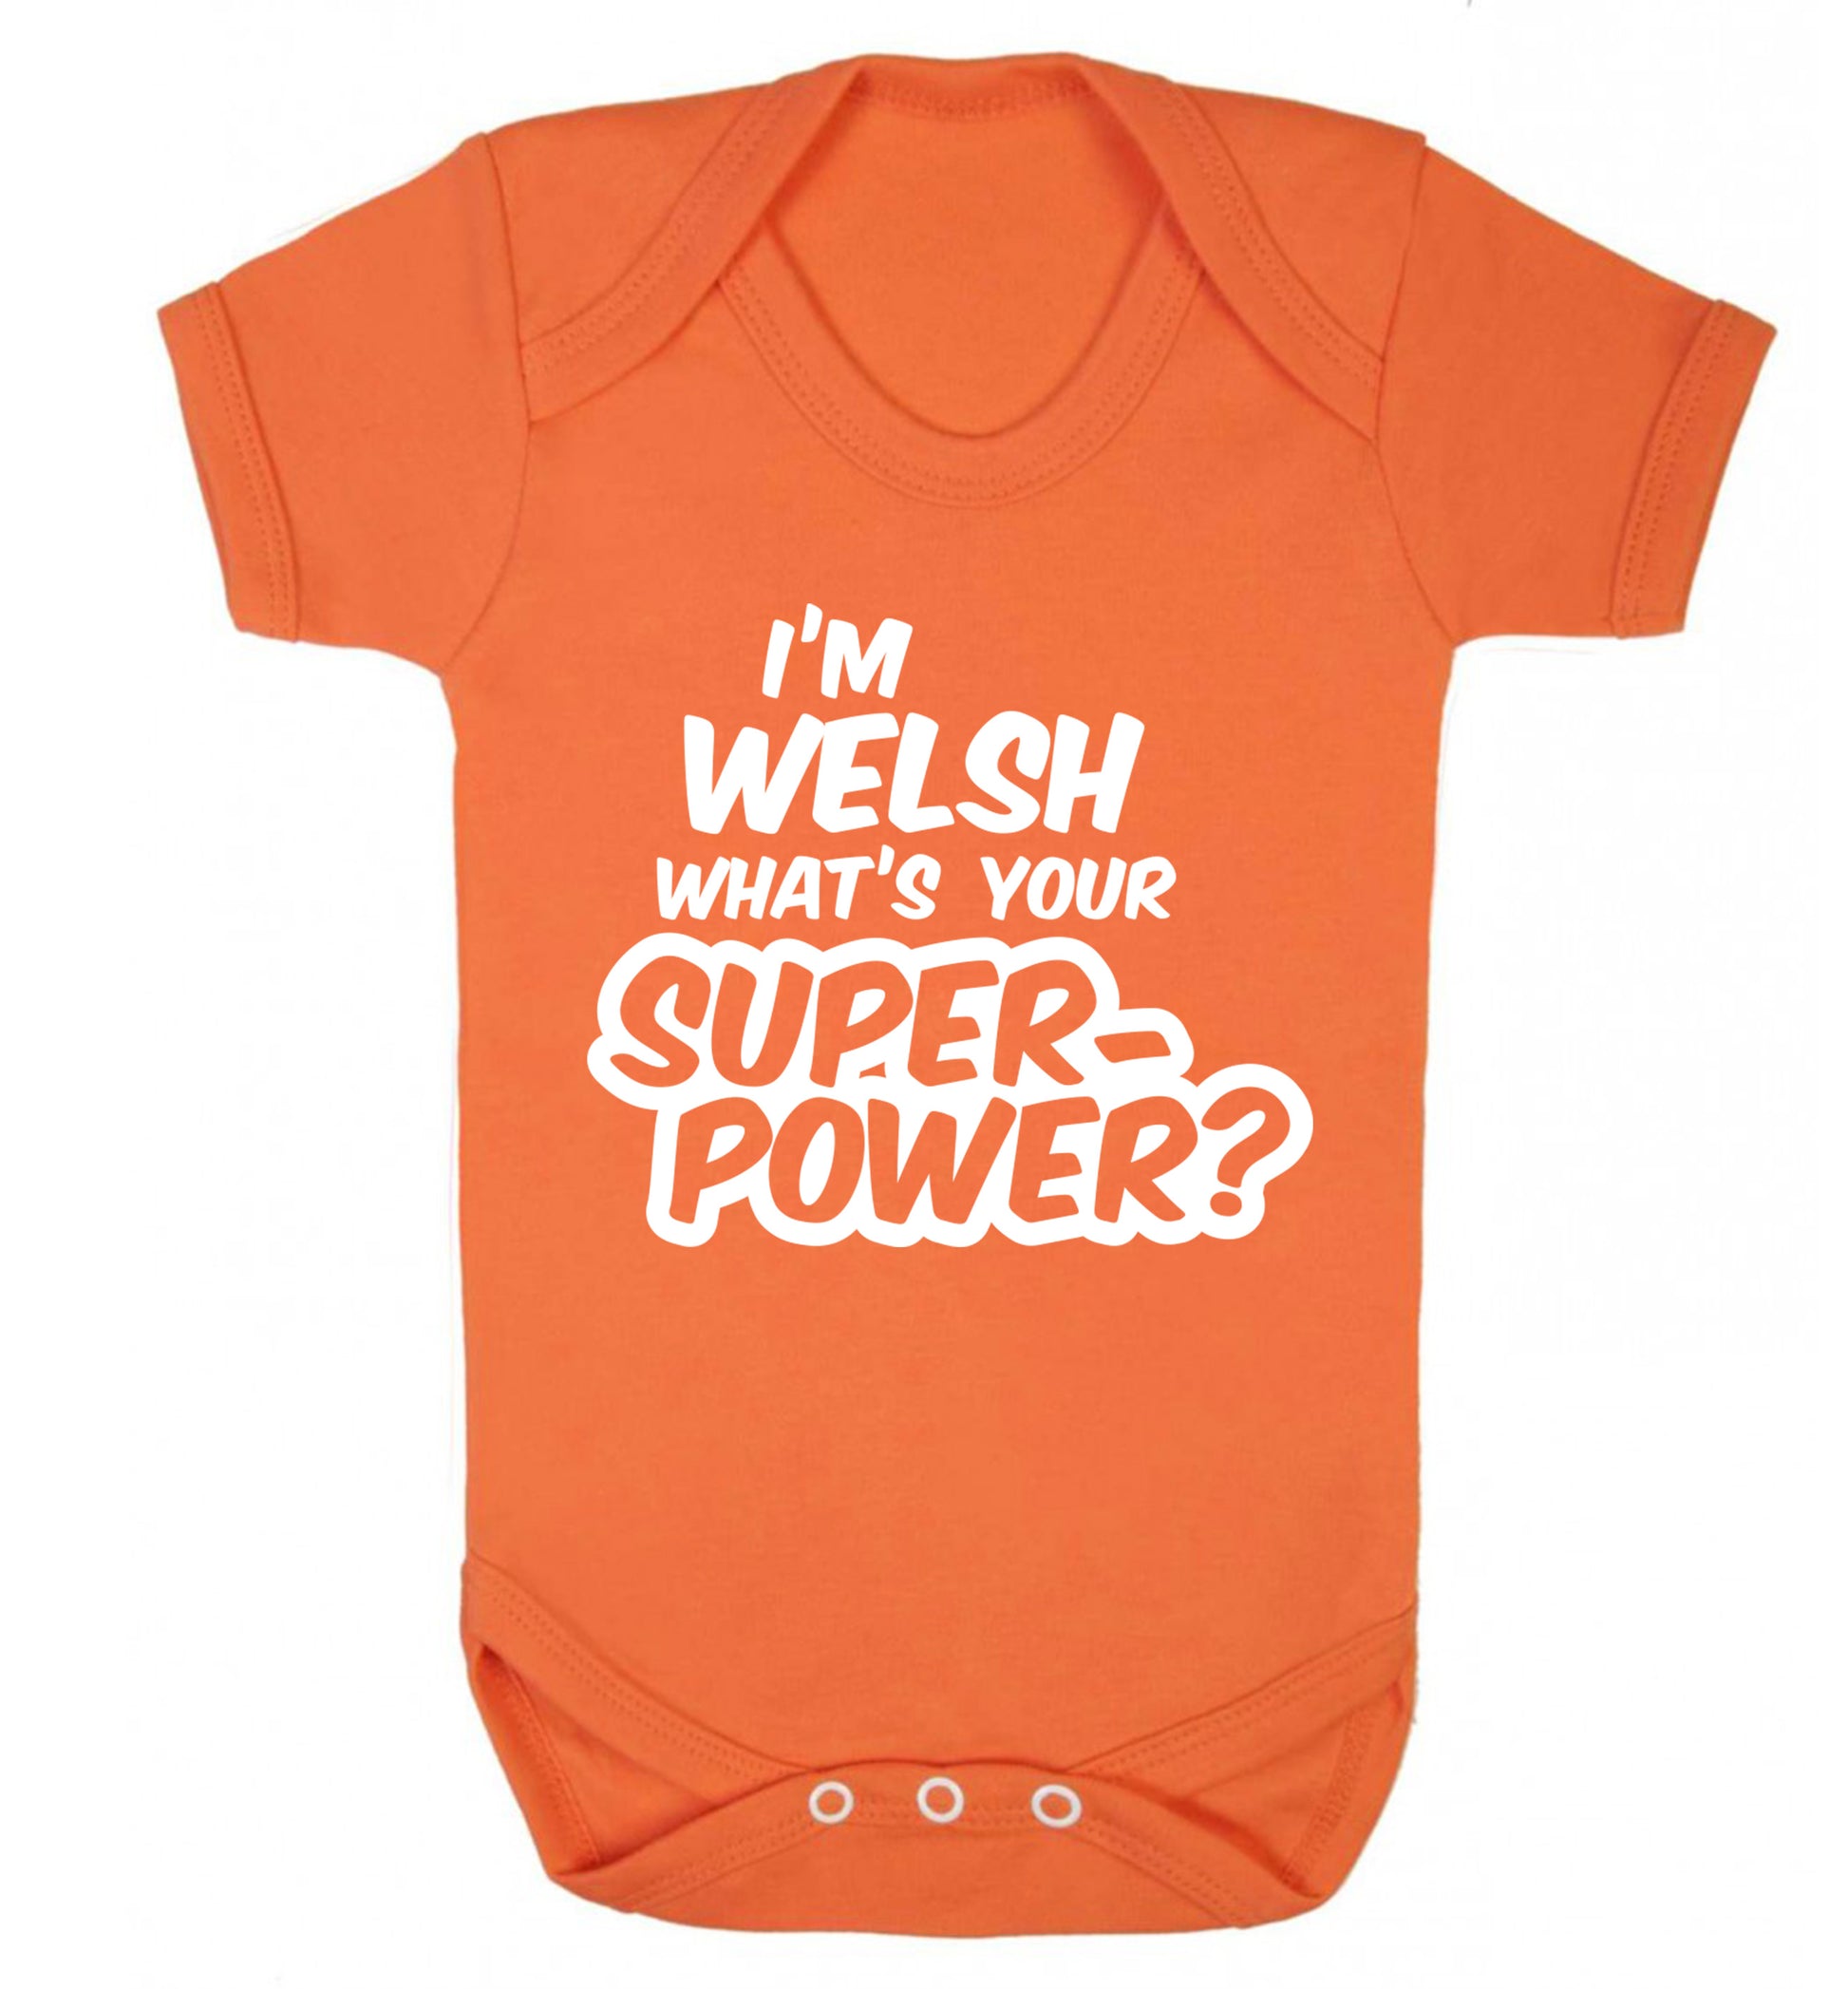 I'm Welsh what's your superpower? Baby Vest orange 18-24 months